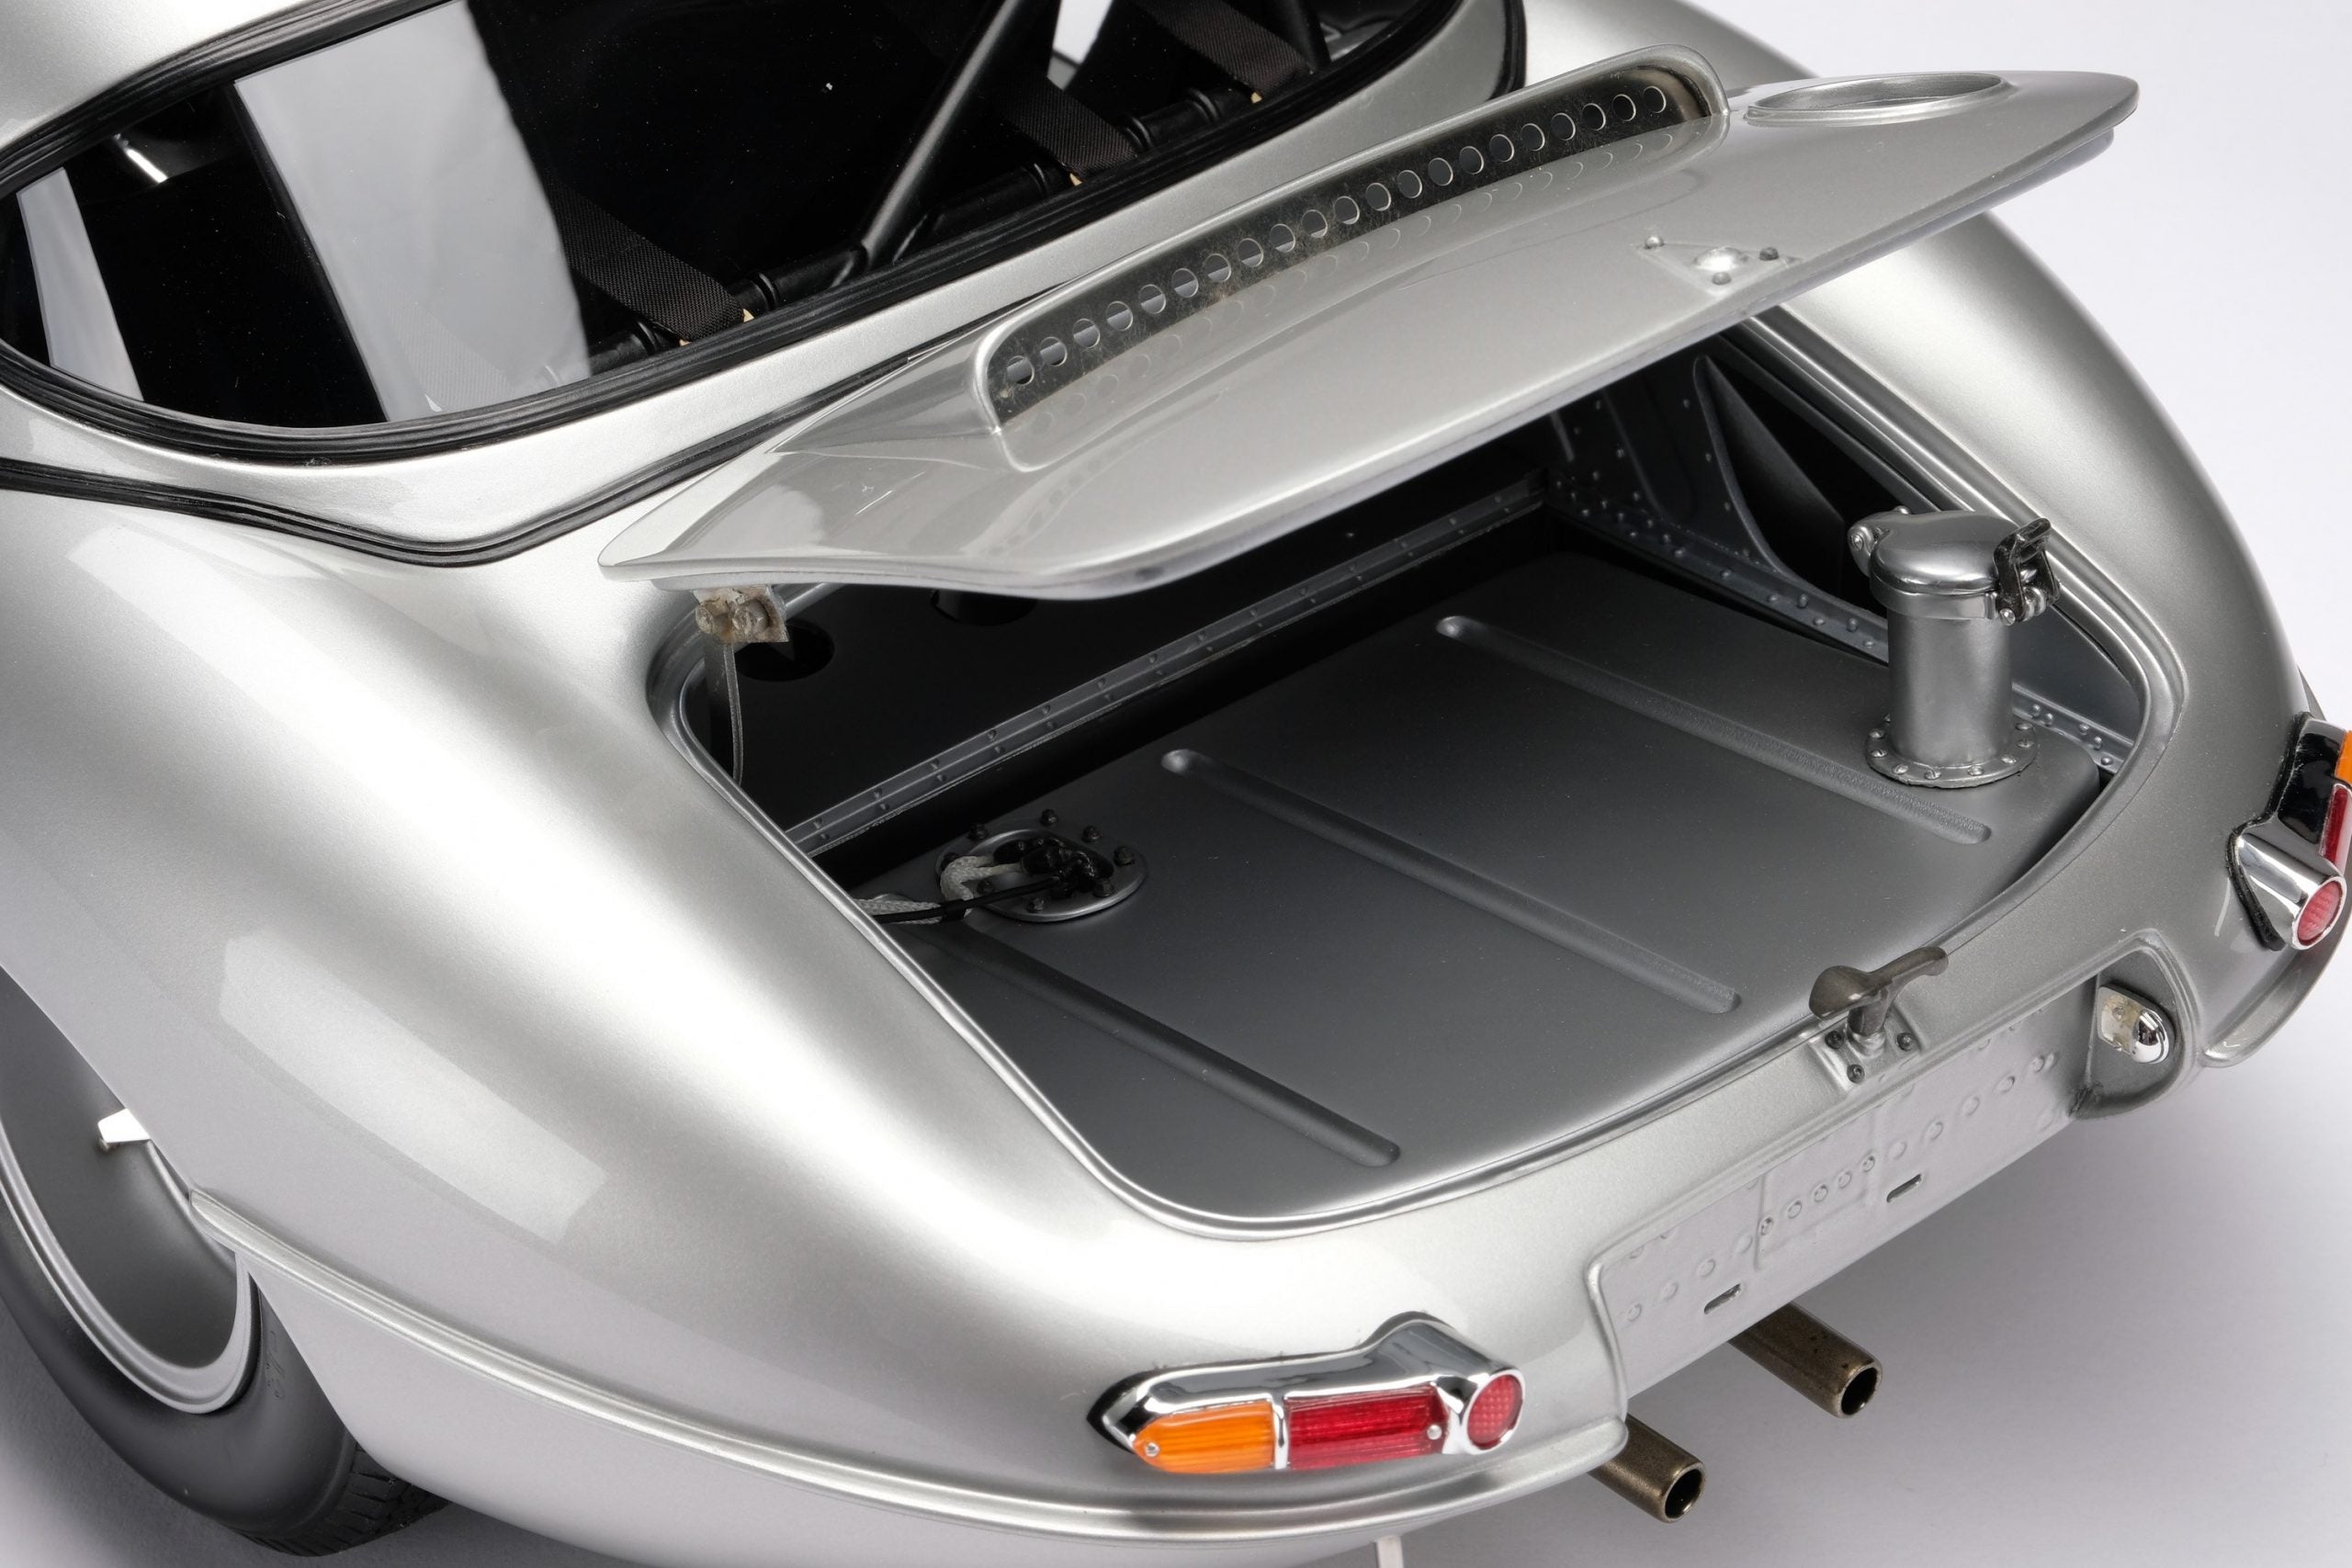 Amalgam 1:8 scale Jaguar E Type Lightweight 'Car Zero'